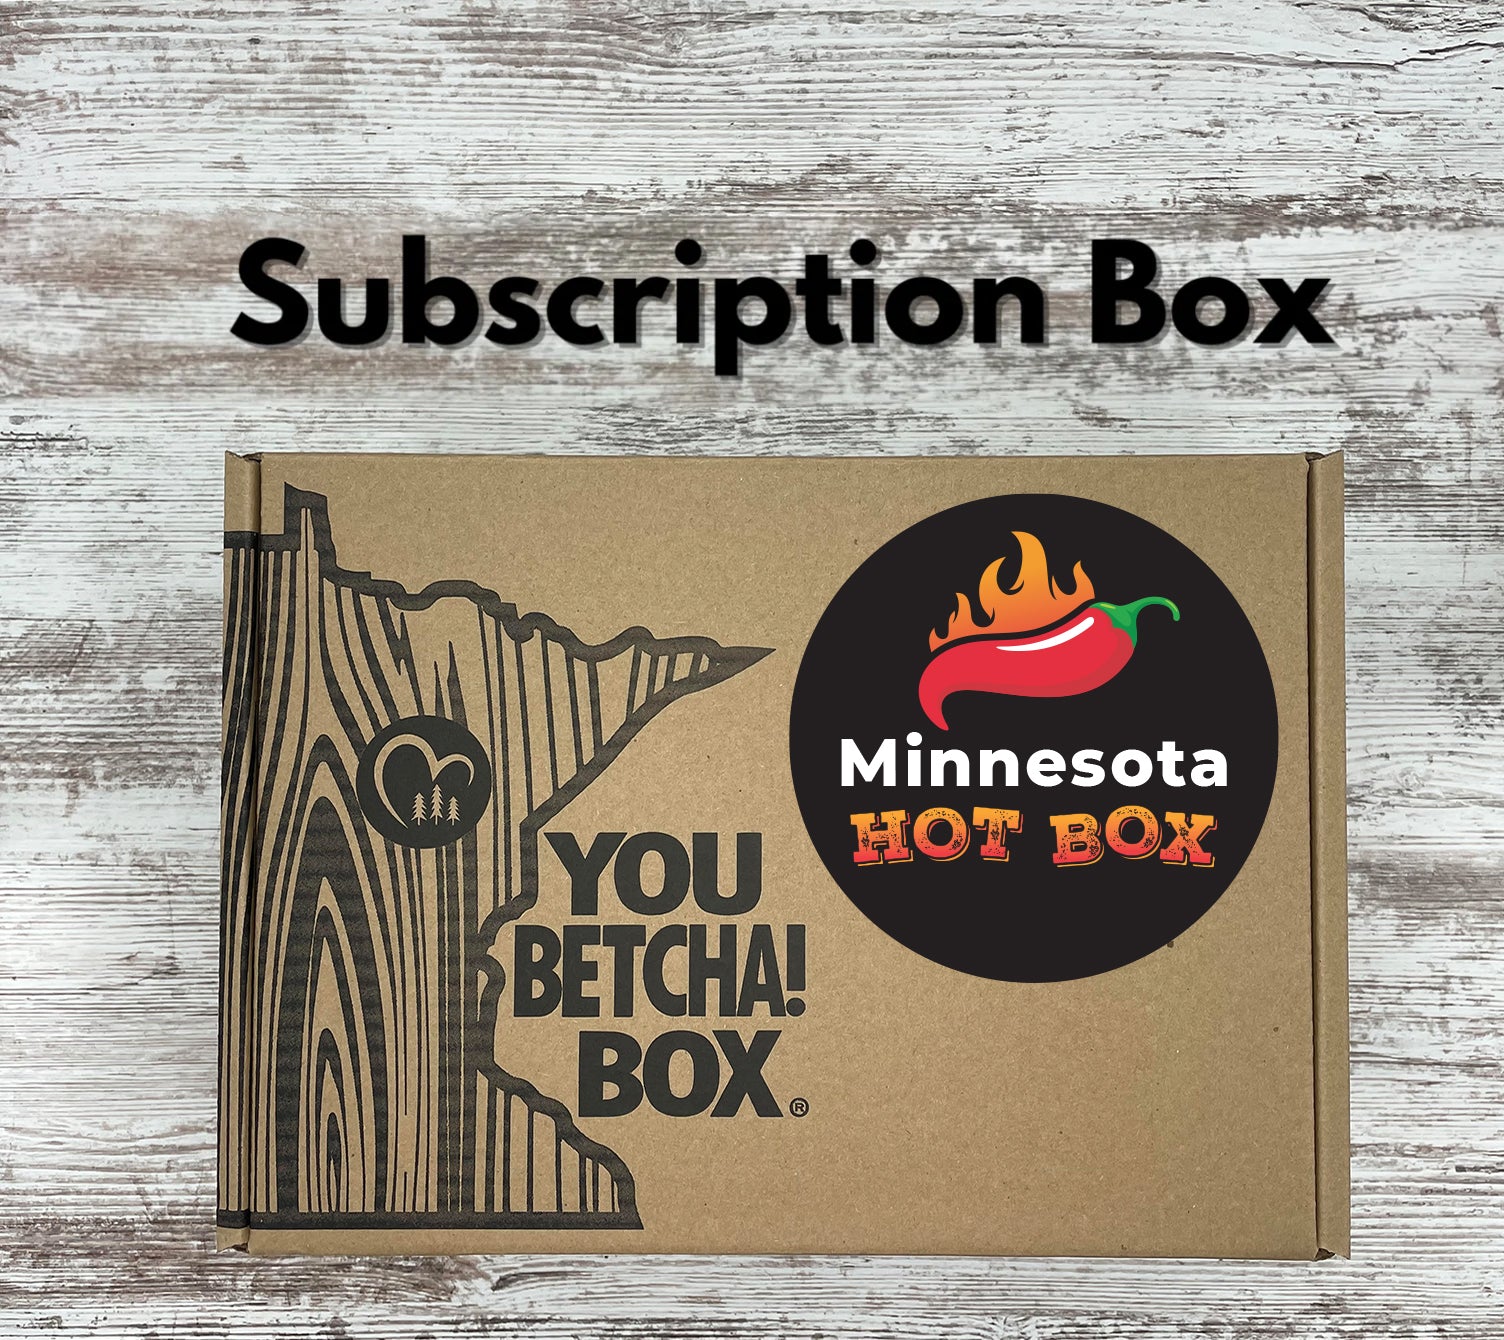 Minnesota Hot Box - Subscription Box